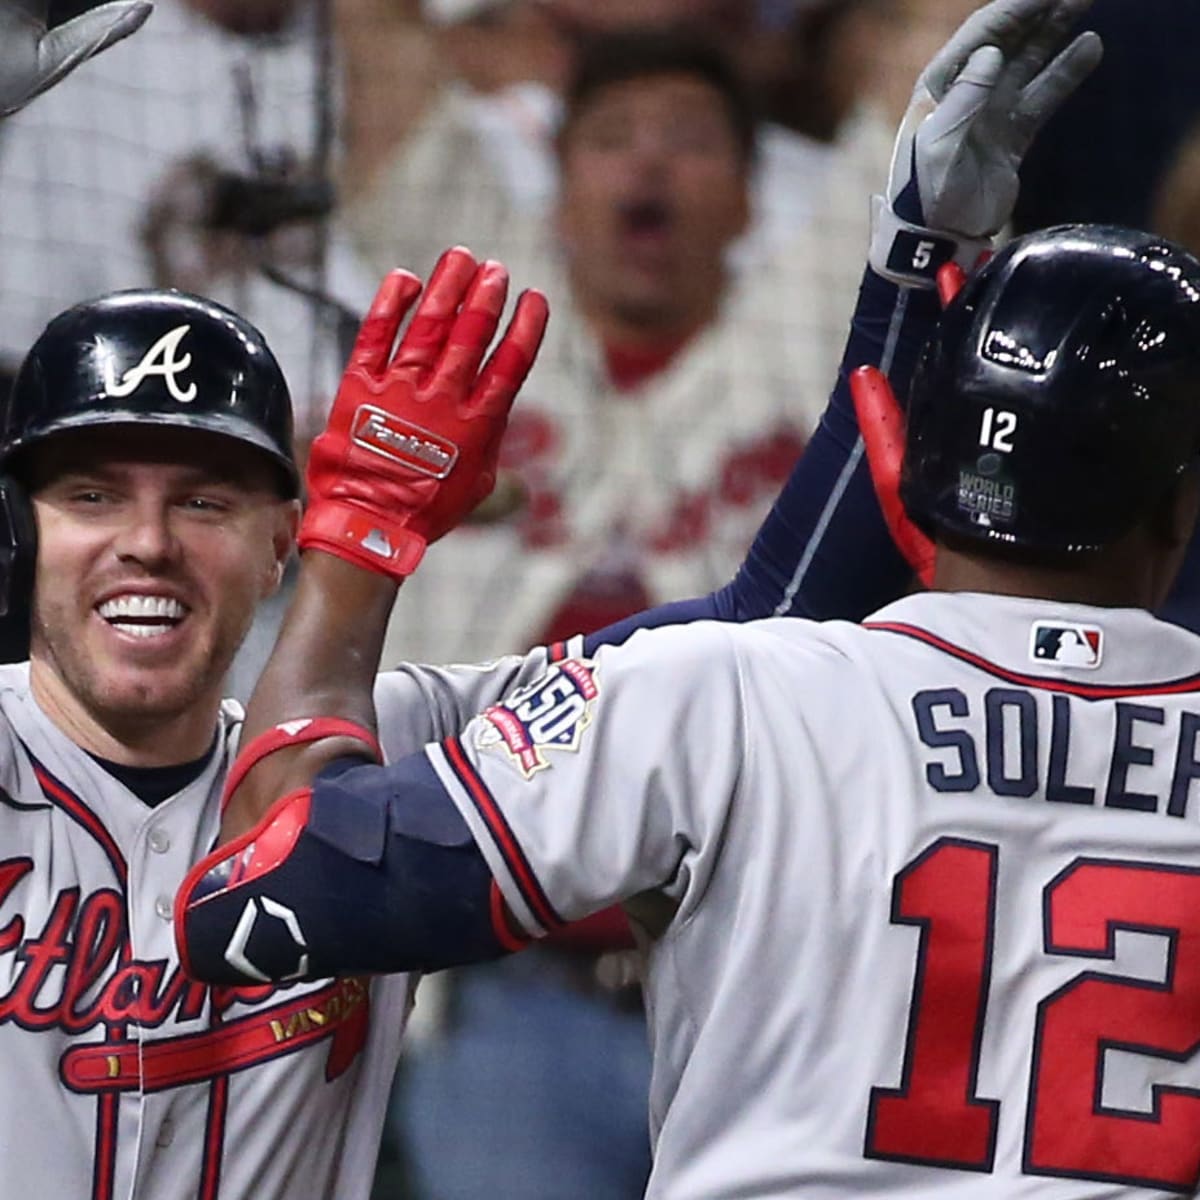 Jorge Soler MVP: Soler named World Series MVP after leading Braves